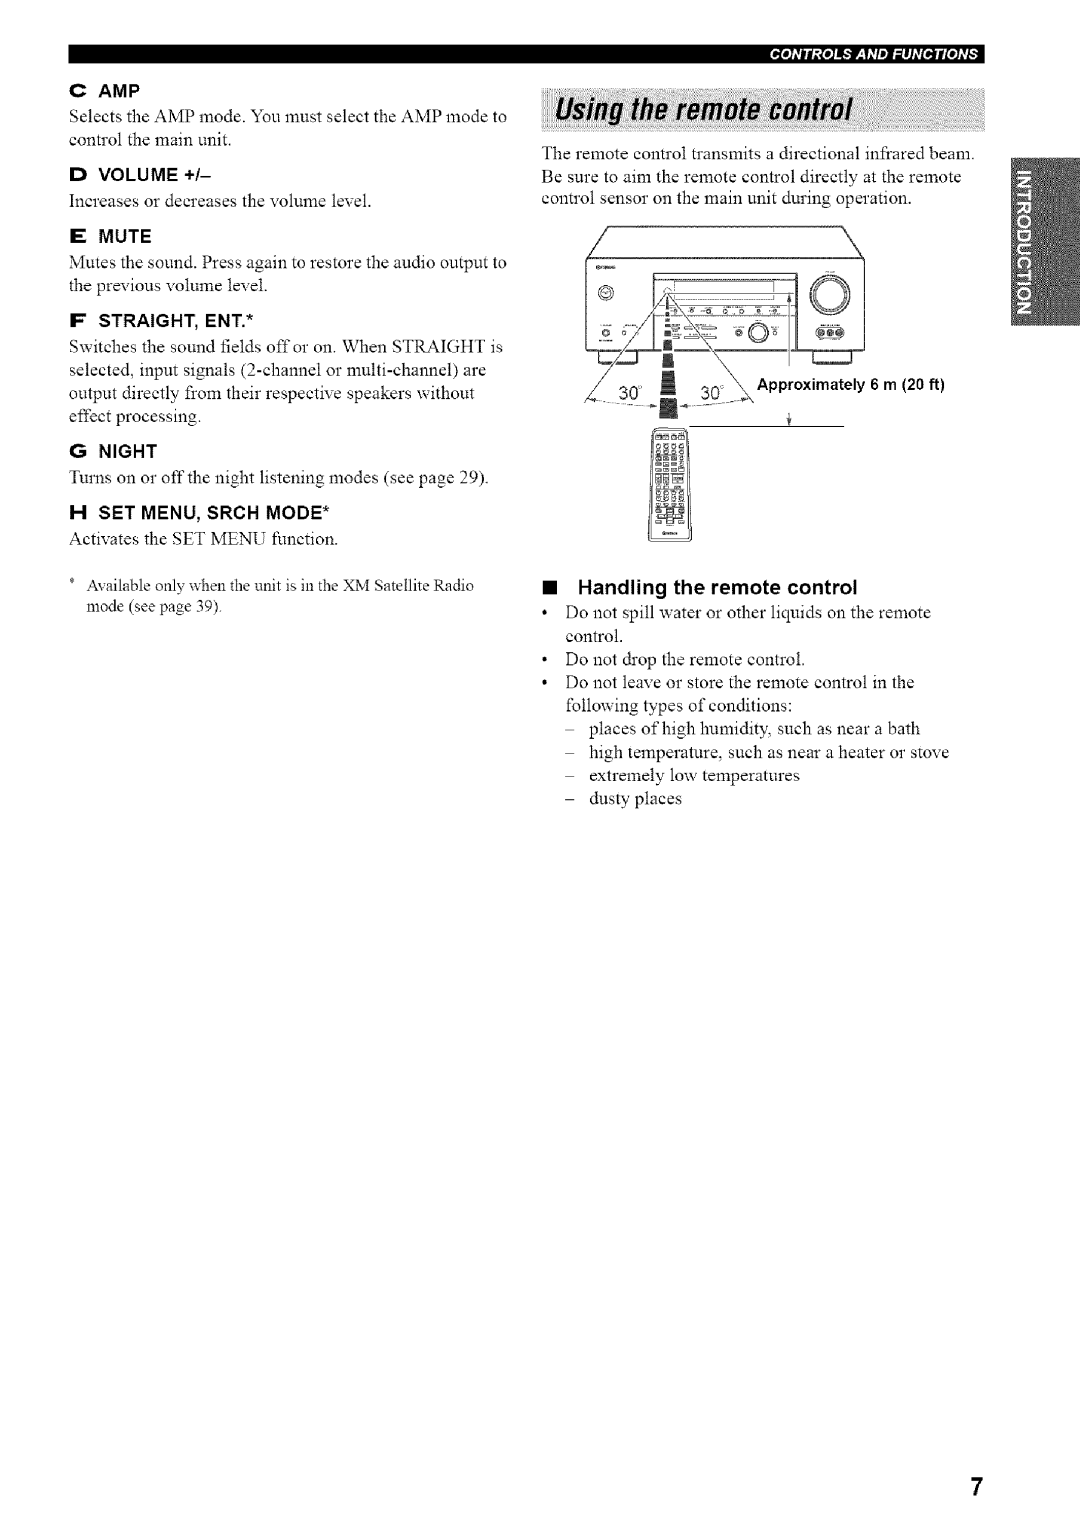 Yamaha HTR-5835 Handling the remote control, D Volume +, E Mute, If Straight, Ent, G Night, H Set Menu, Srch Mode 